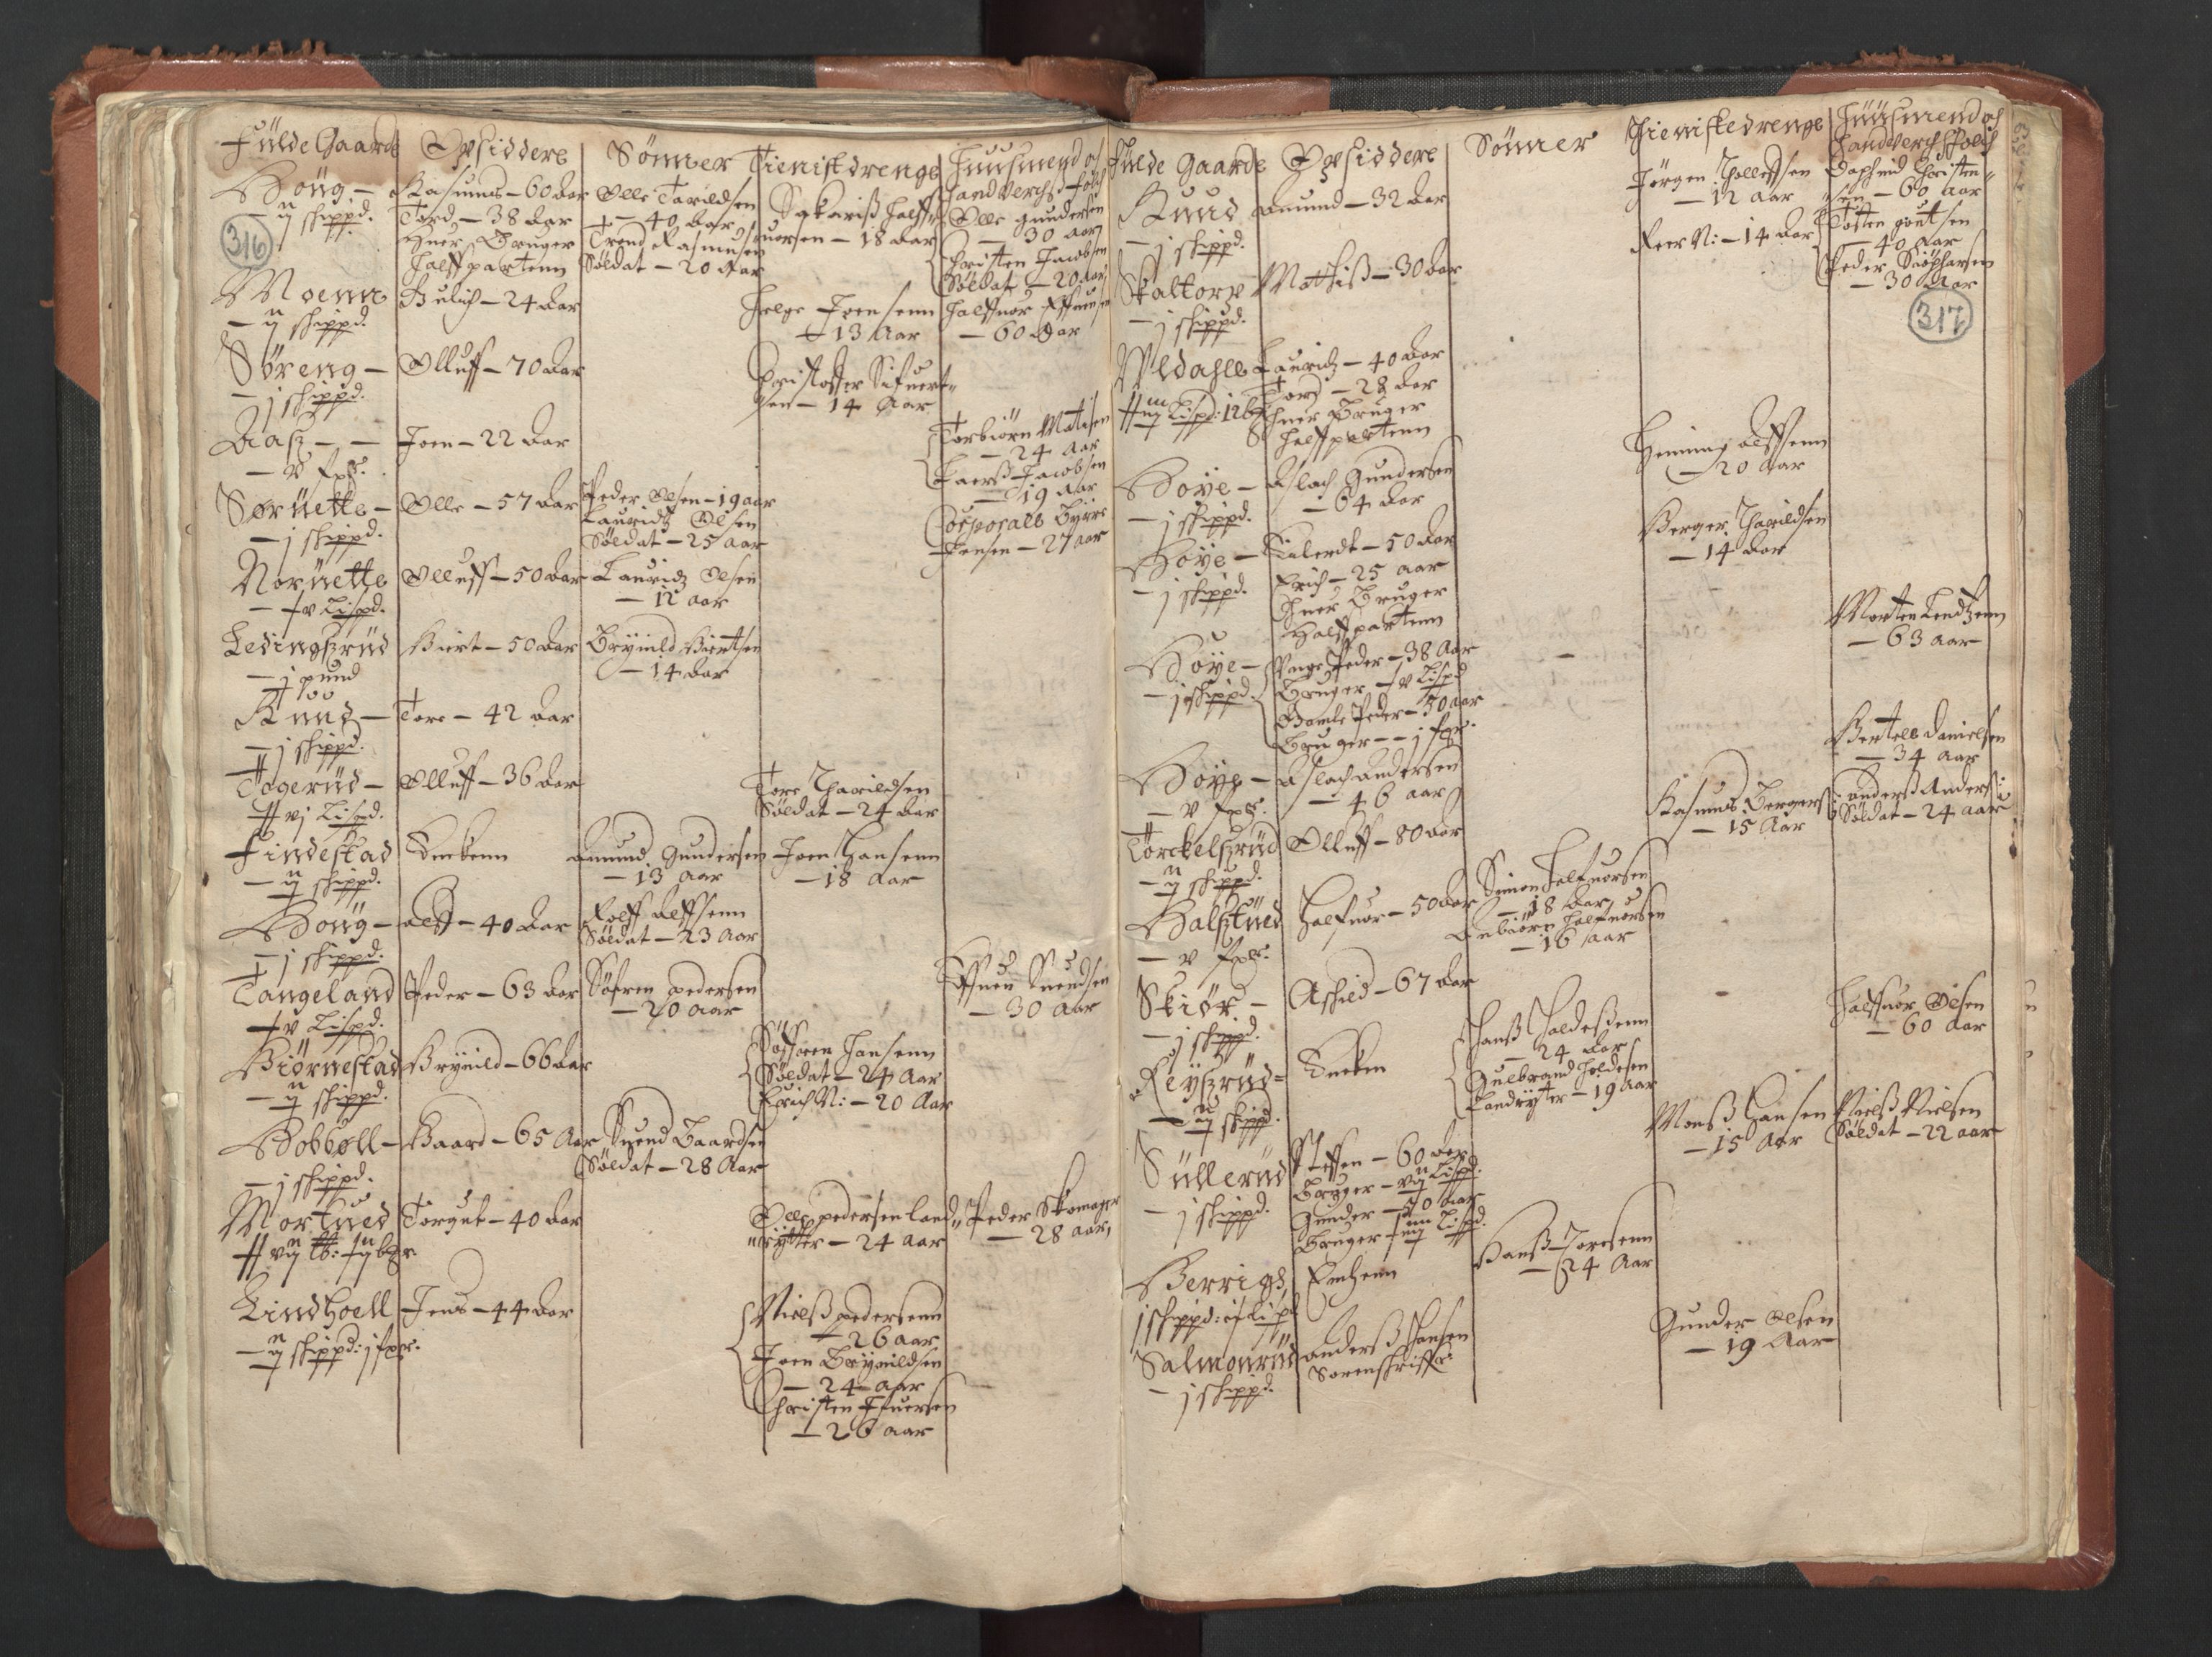 RA, Fogdenes og sorenskrivernes manntall 1664-1666, nr. 1: Fogderier (len og skipreider) i nåværende Østfold fylke, 1664, s. 316-317